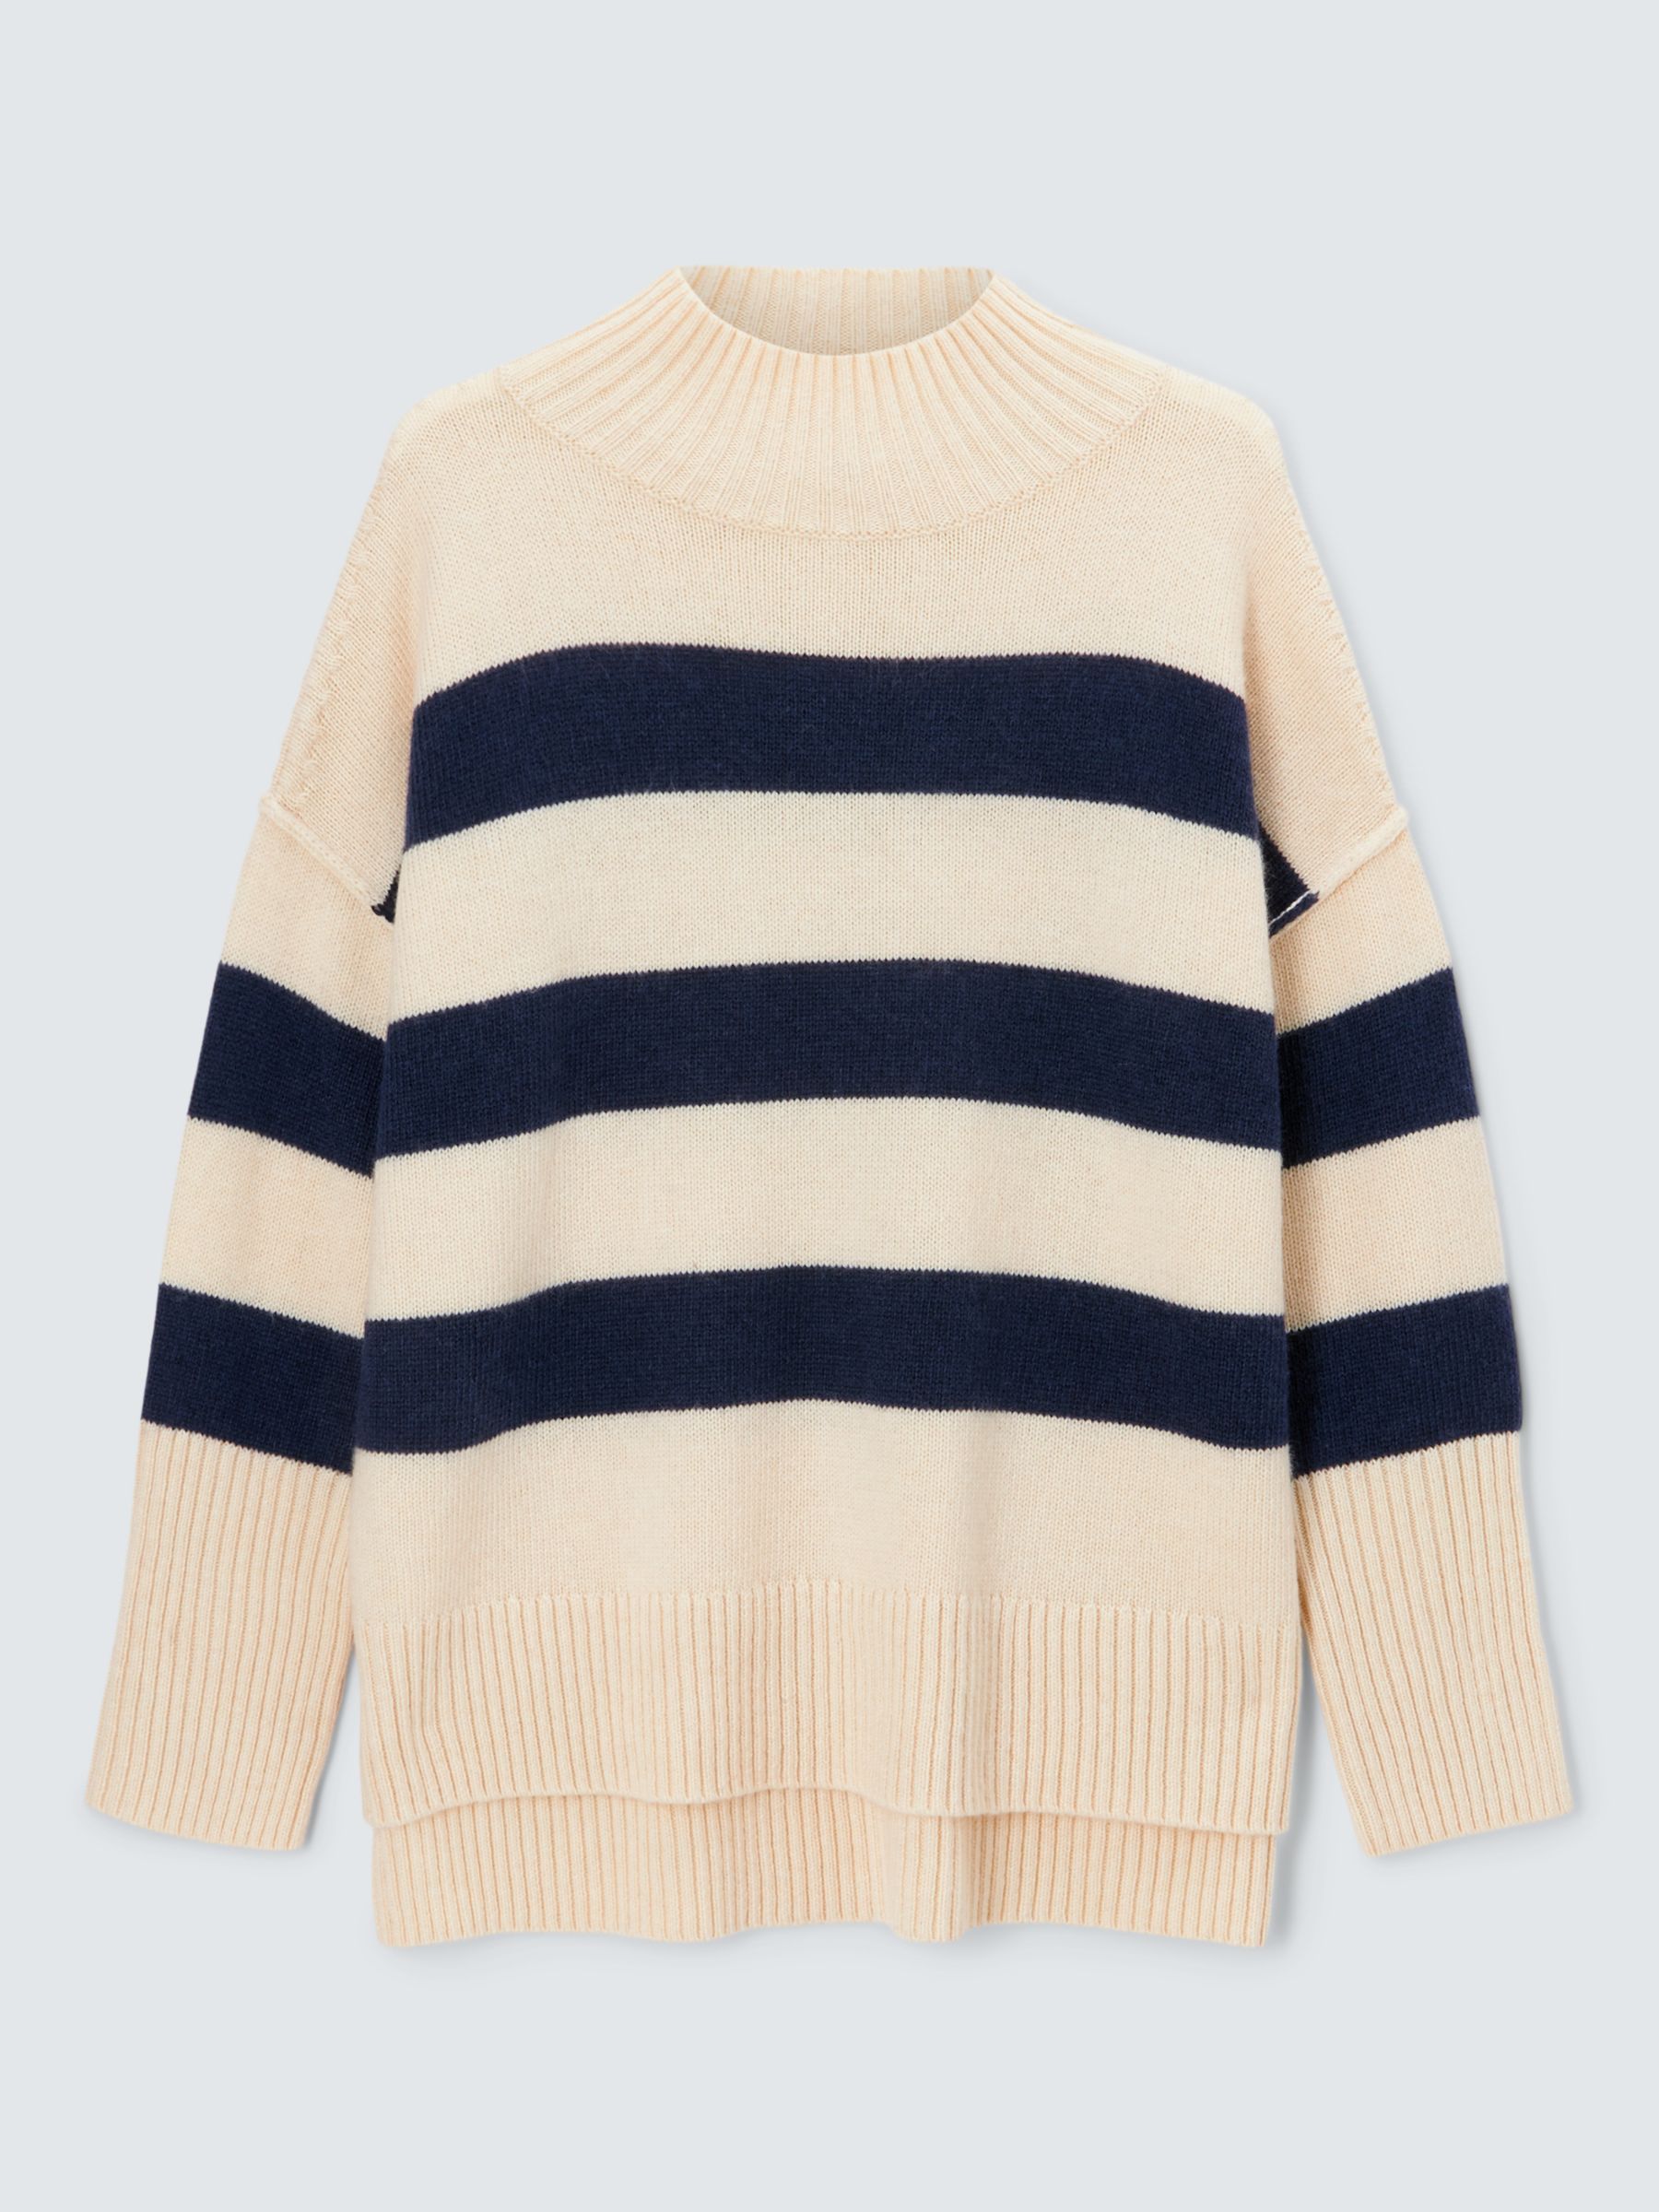 AND/OR Ember Stripe Wool Blend Jumper, Cream £59.00